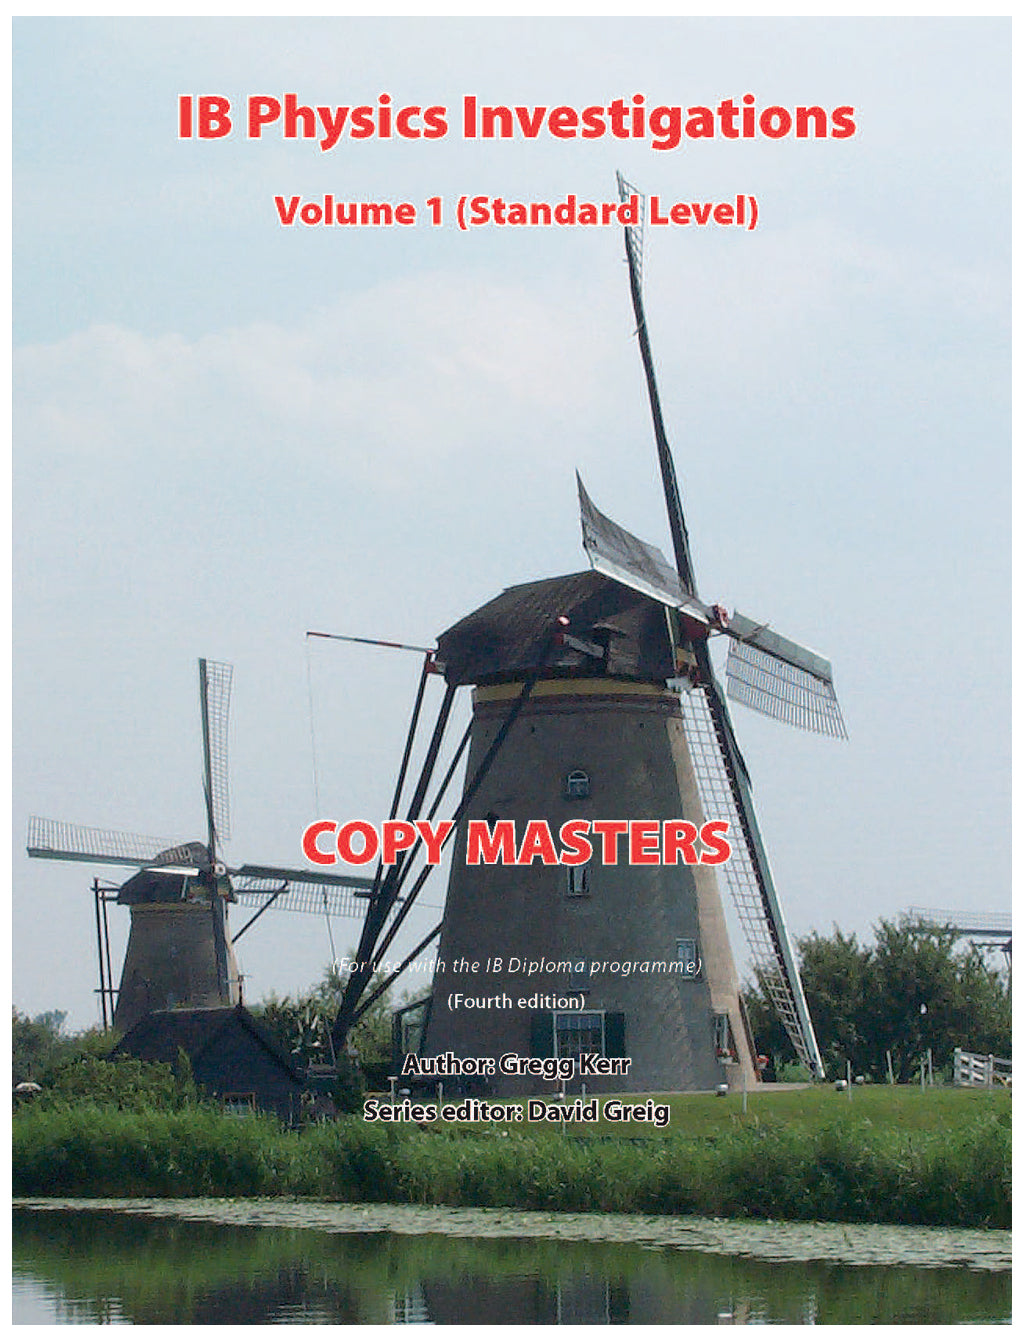 IB Physics Investigations Standard Level (4th Edition)